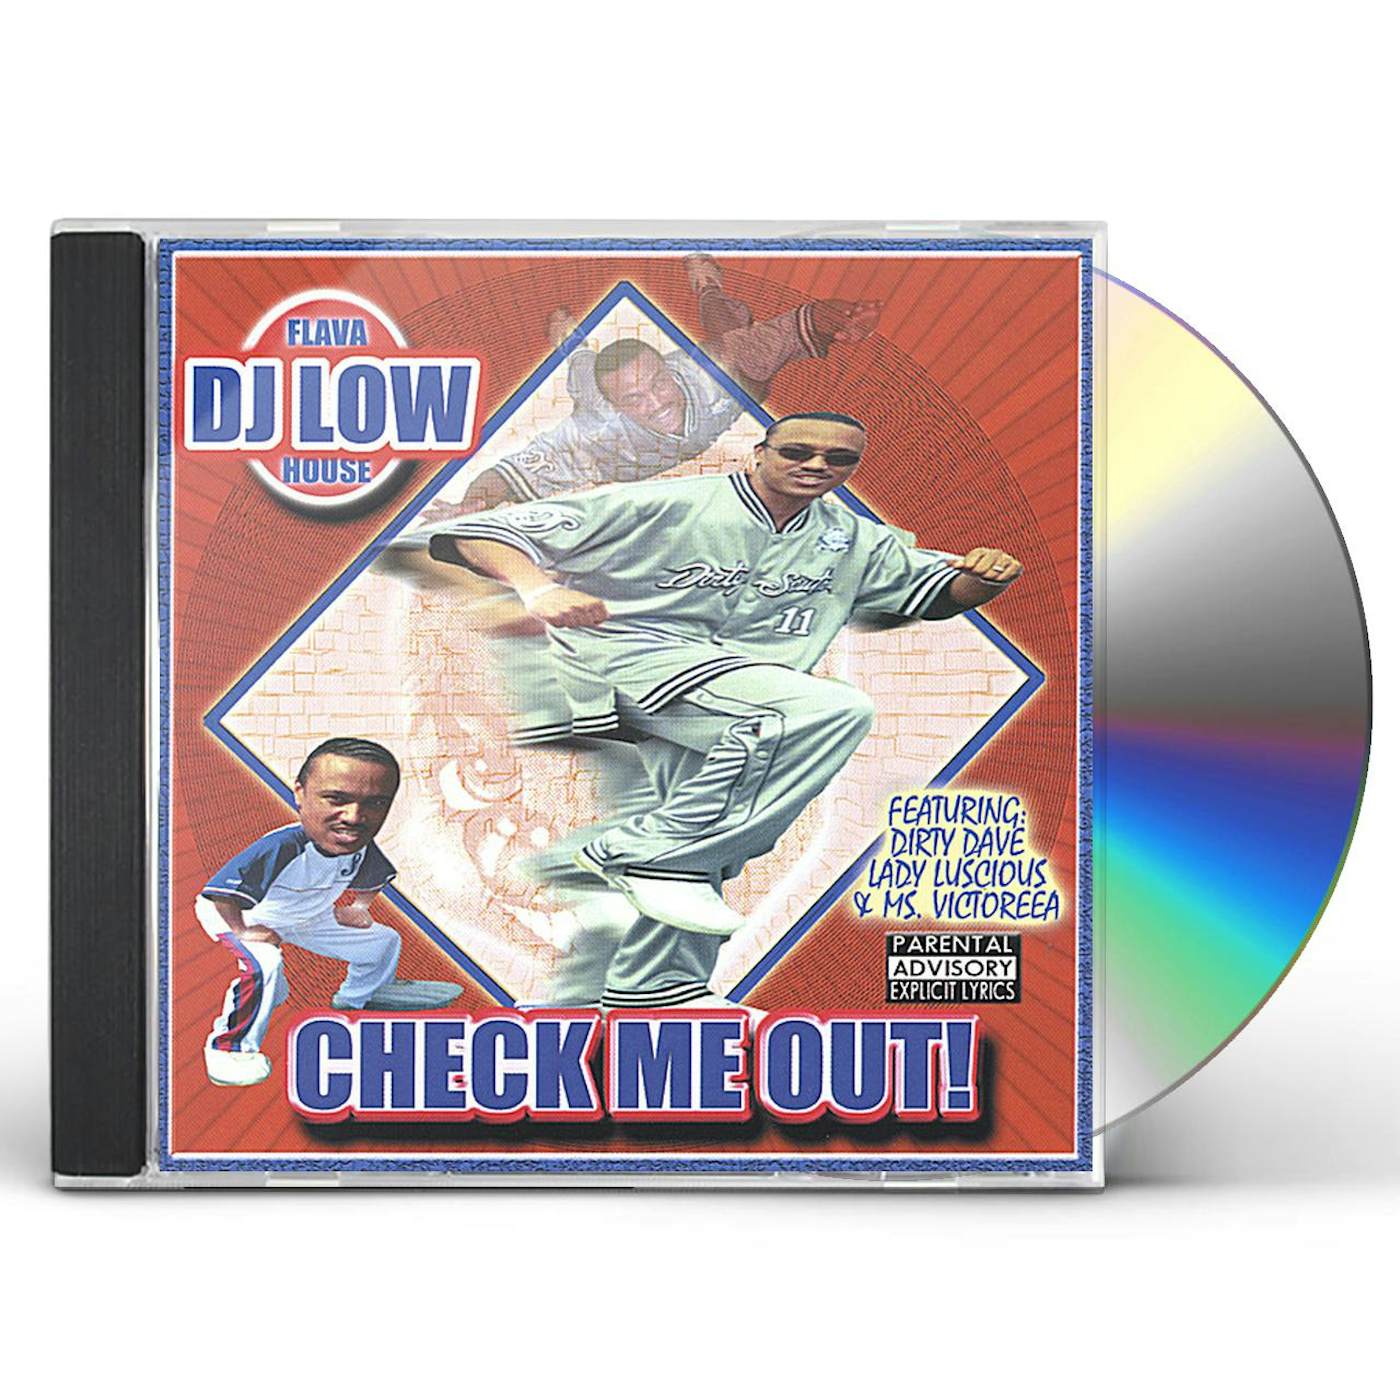 DJ Low CHECK ME OUT CD